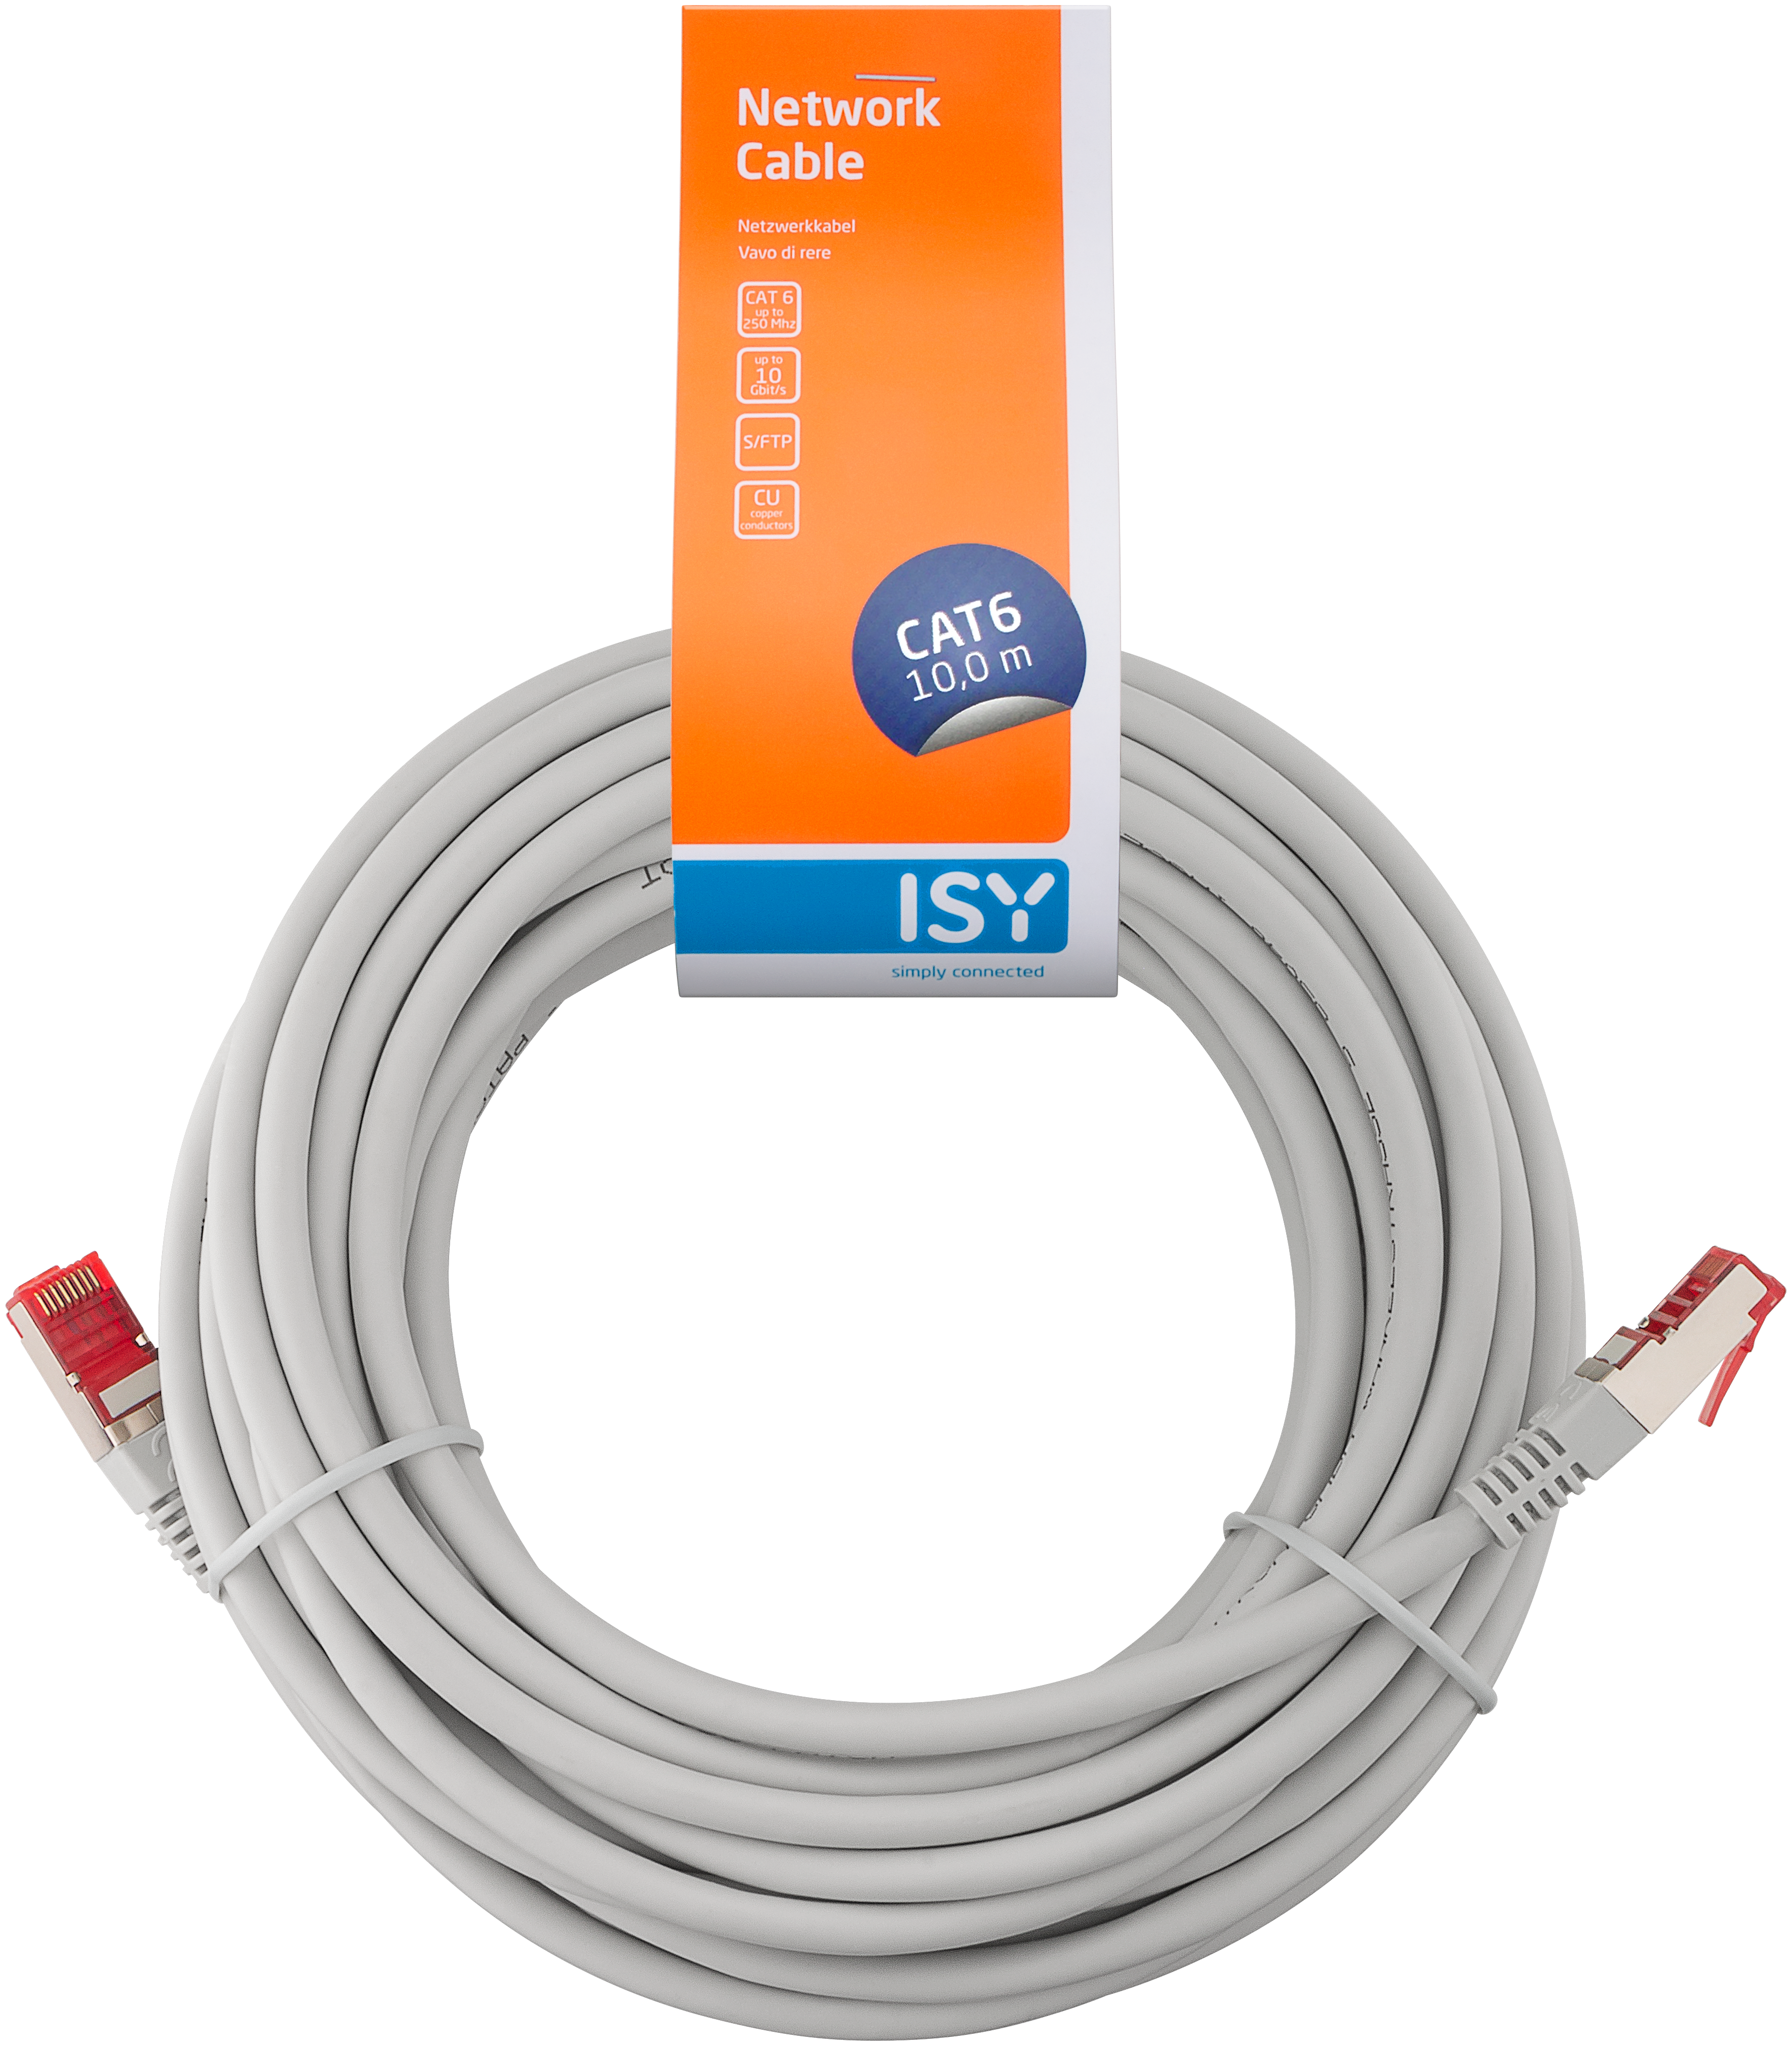 ISY IPC-6100-1-5B-MP, Netzwerkkabel Set, 10 m